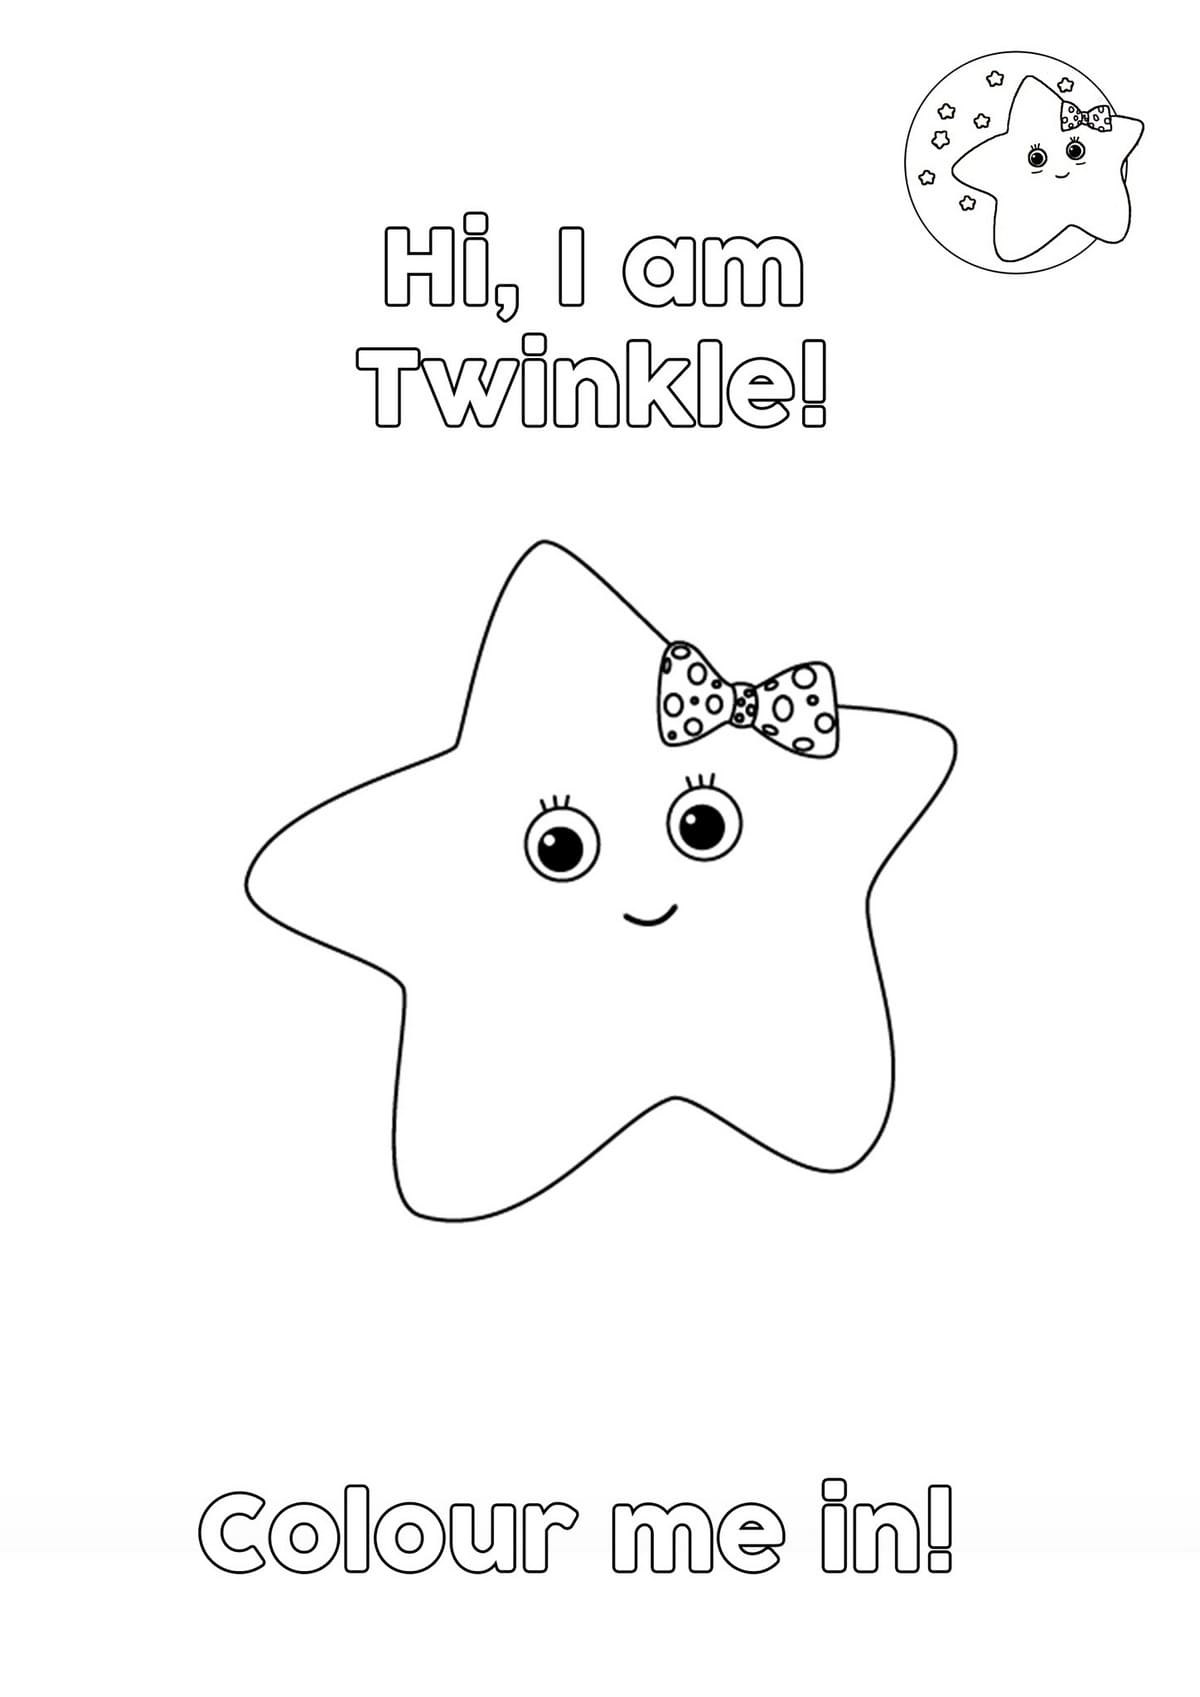 Para Colorear Little Baby Bum Twinkie